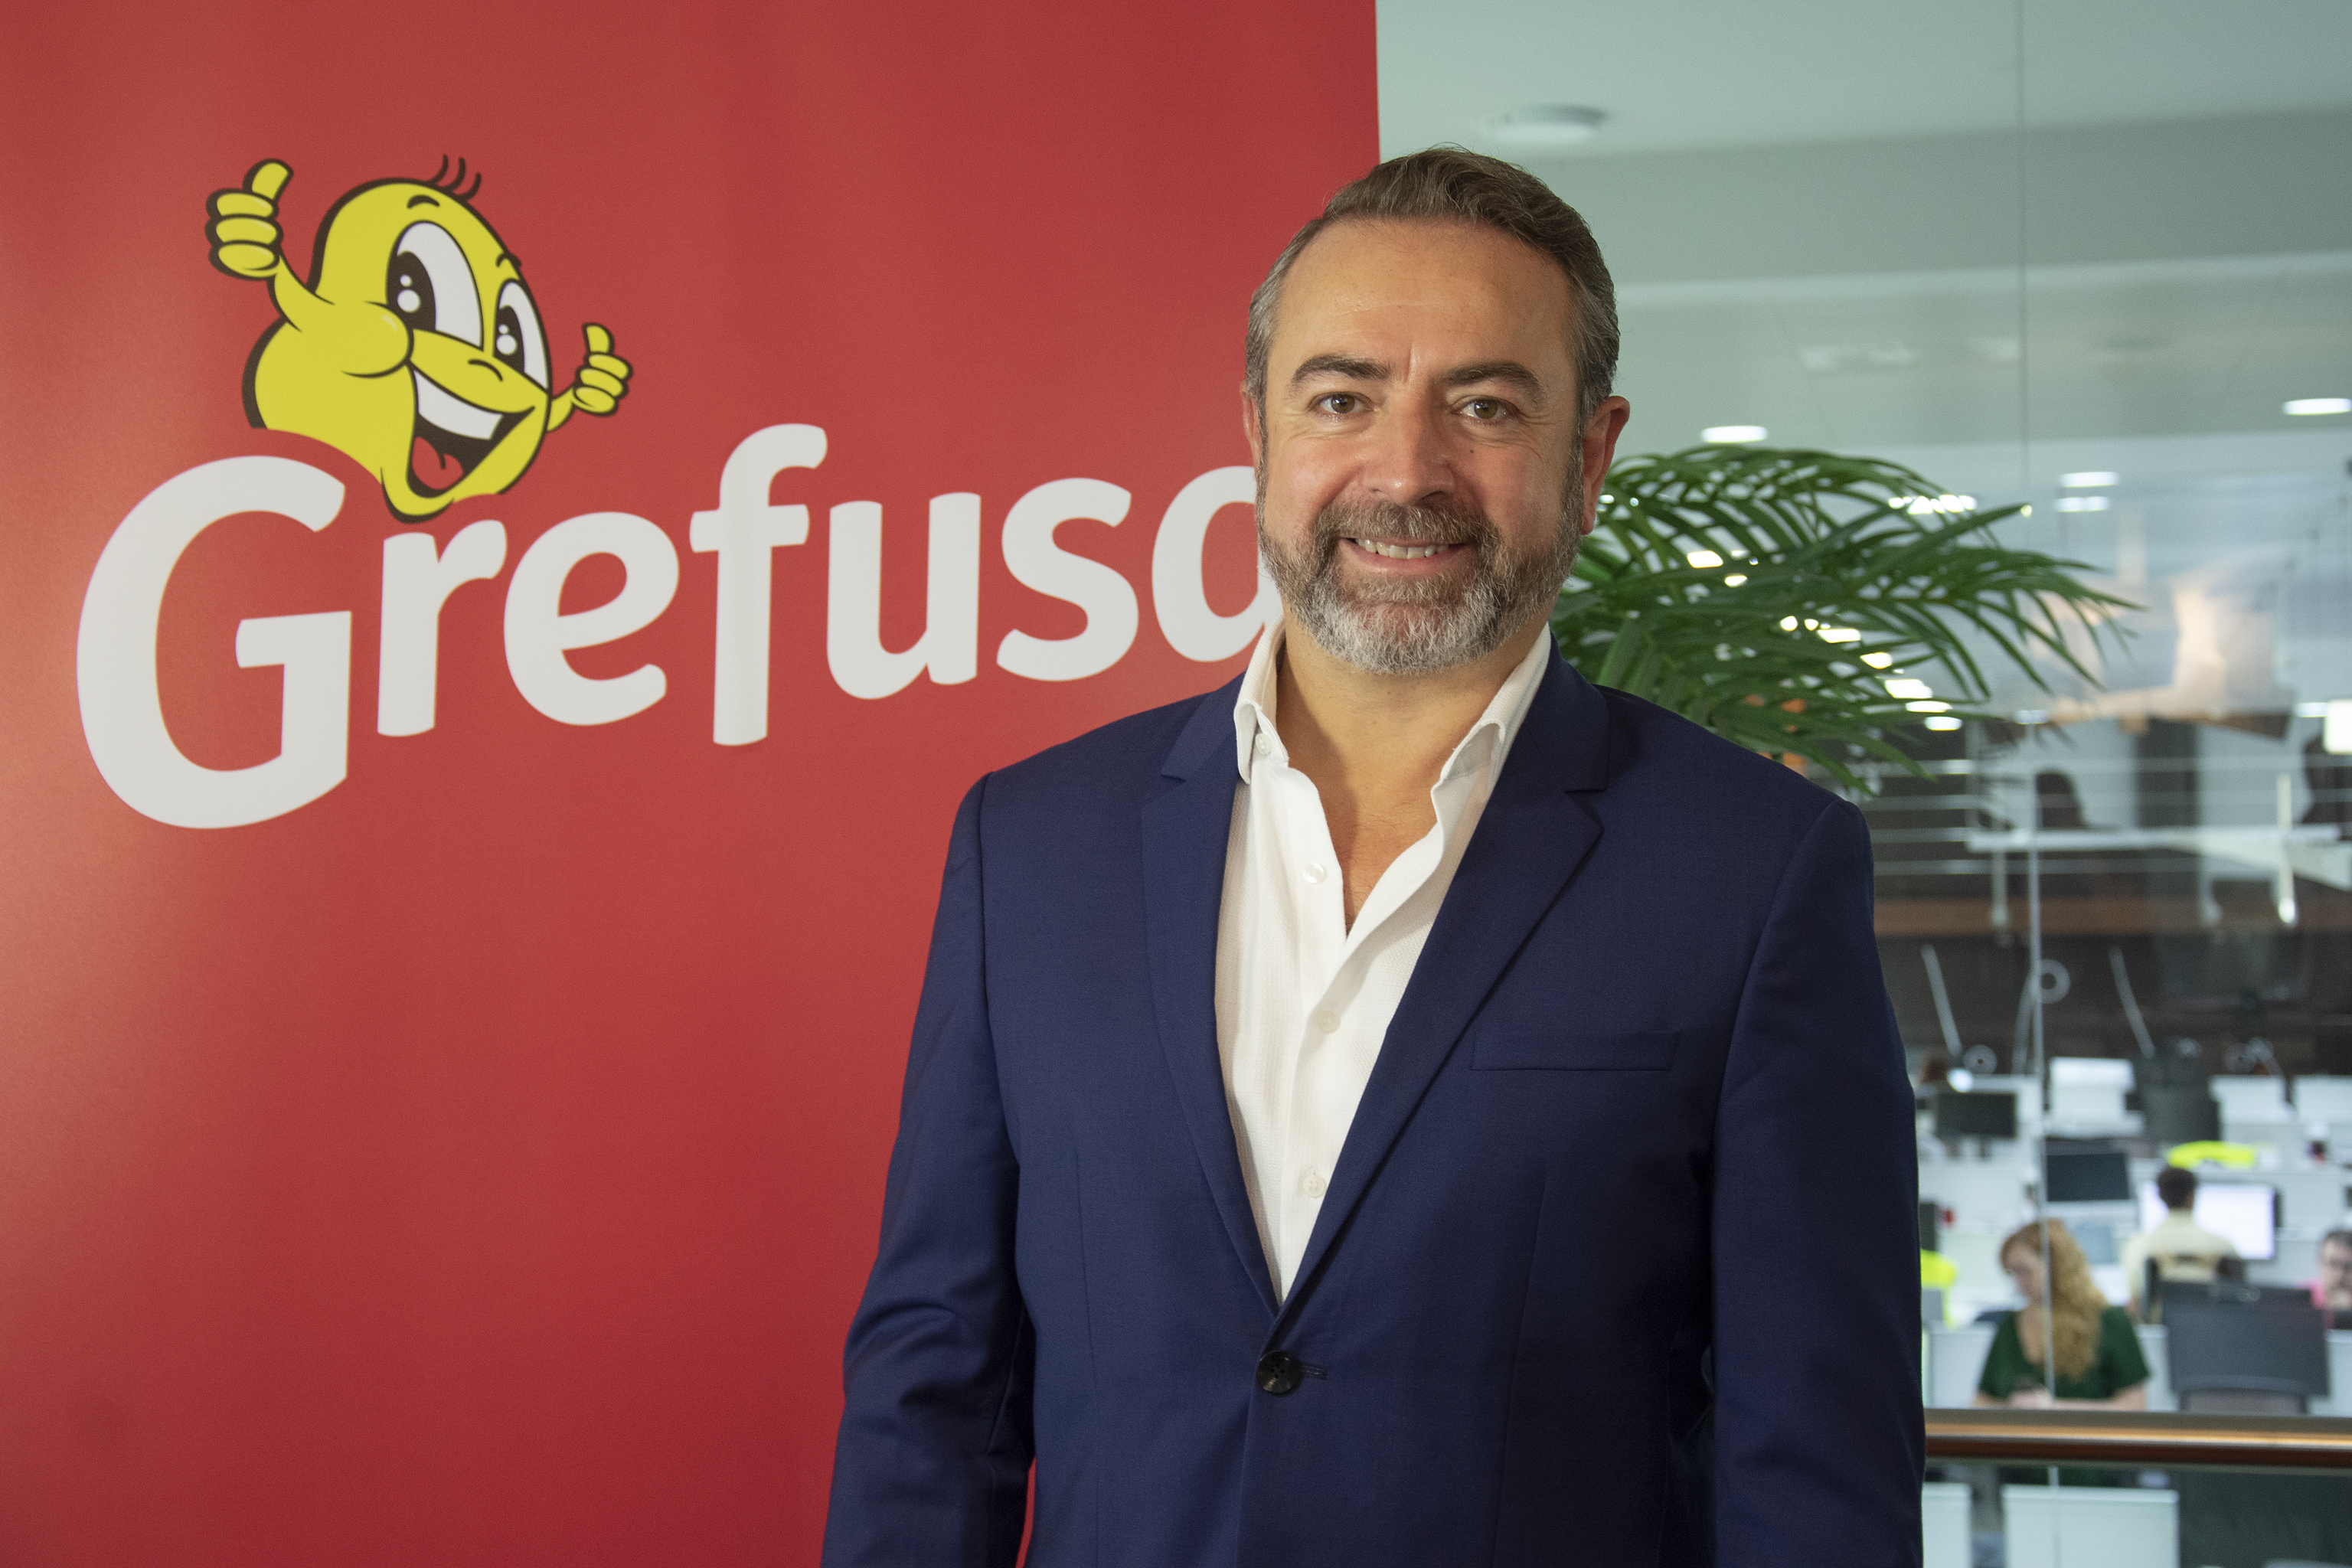 Agustn Gregori, CEO de Grefusa